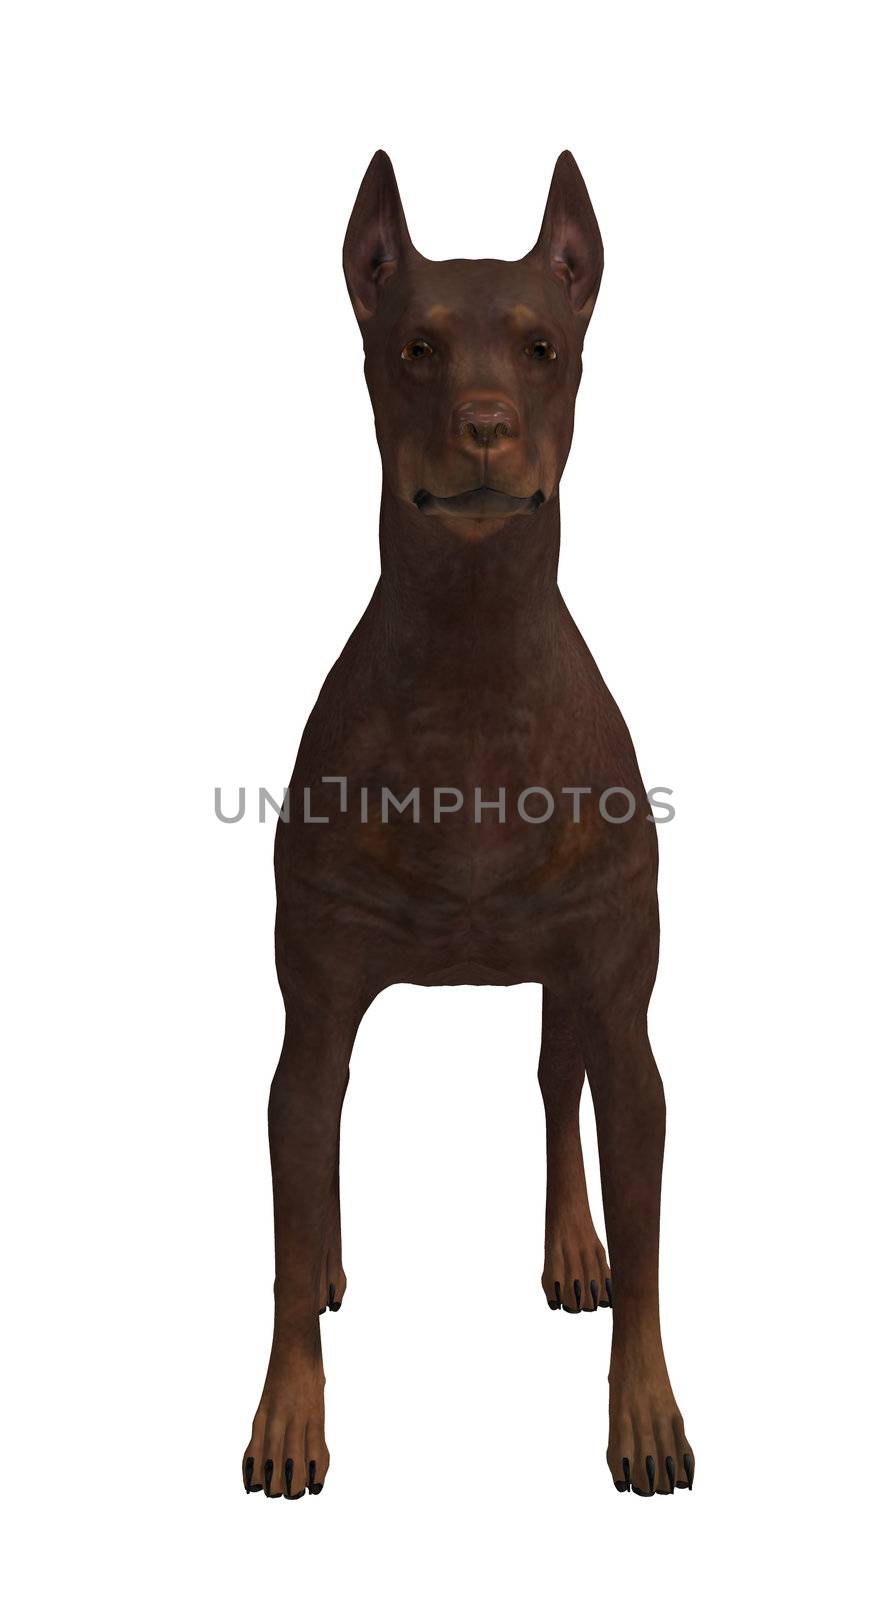 A Brown Dog by kathygold